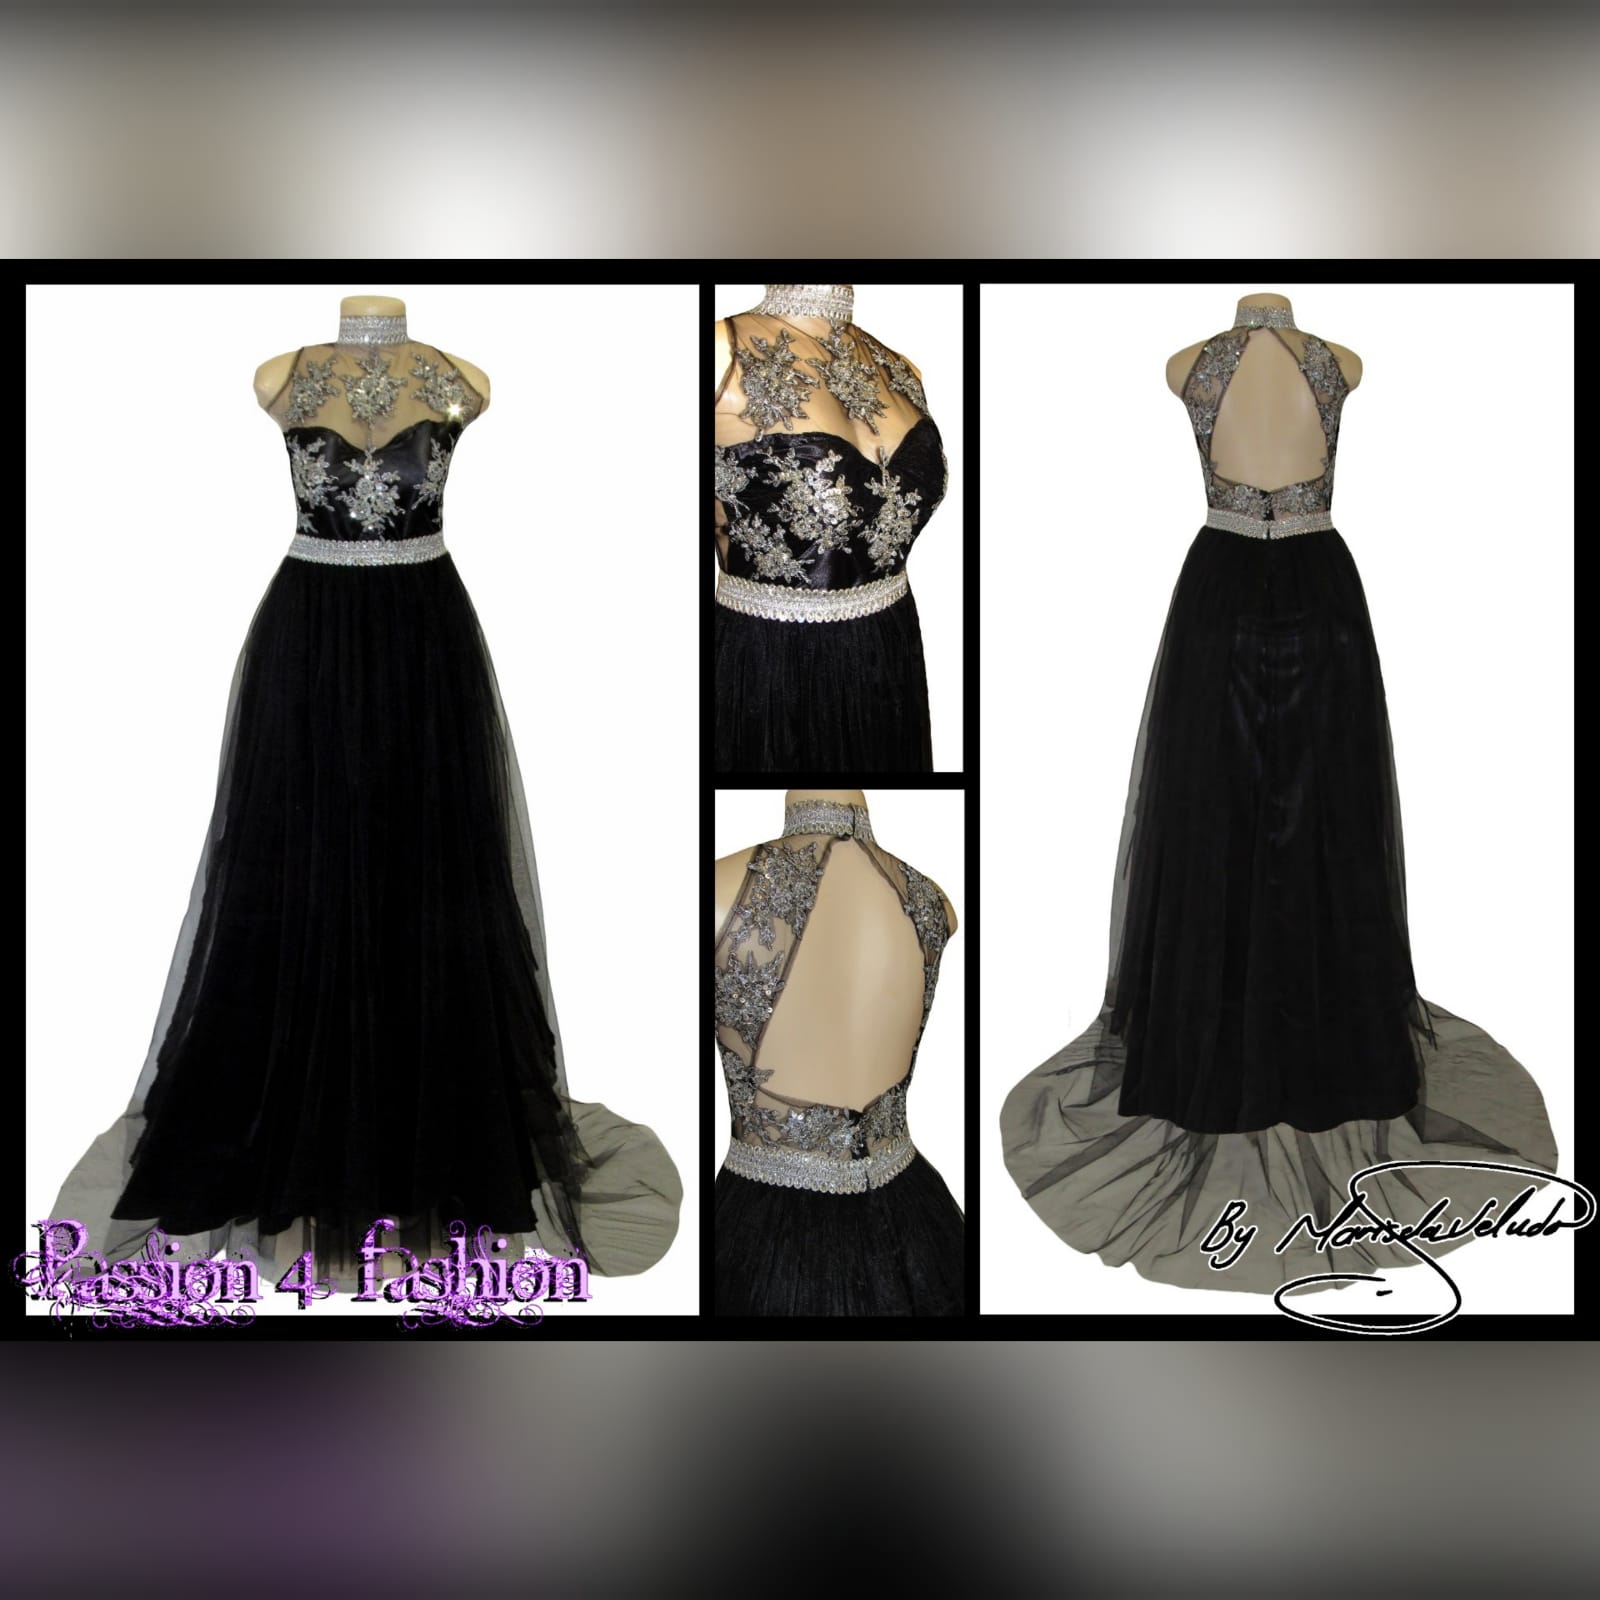 Black & silver long elegant prom dress 6 black & silver, long & elegant prom dance dress with a triangular open back. Choker neckline and an under bust bling belt with train.